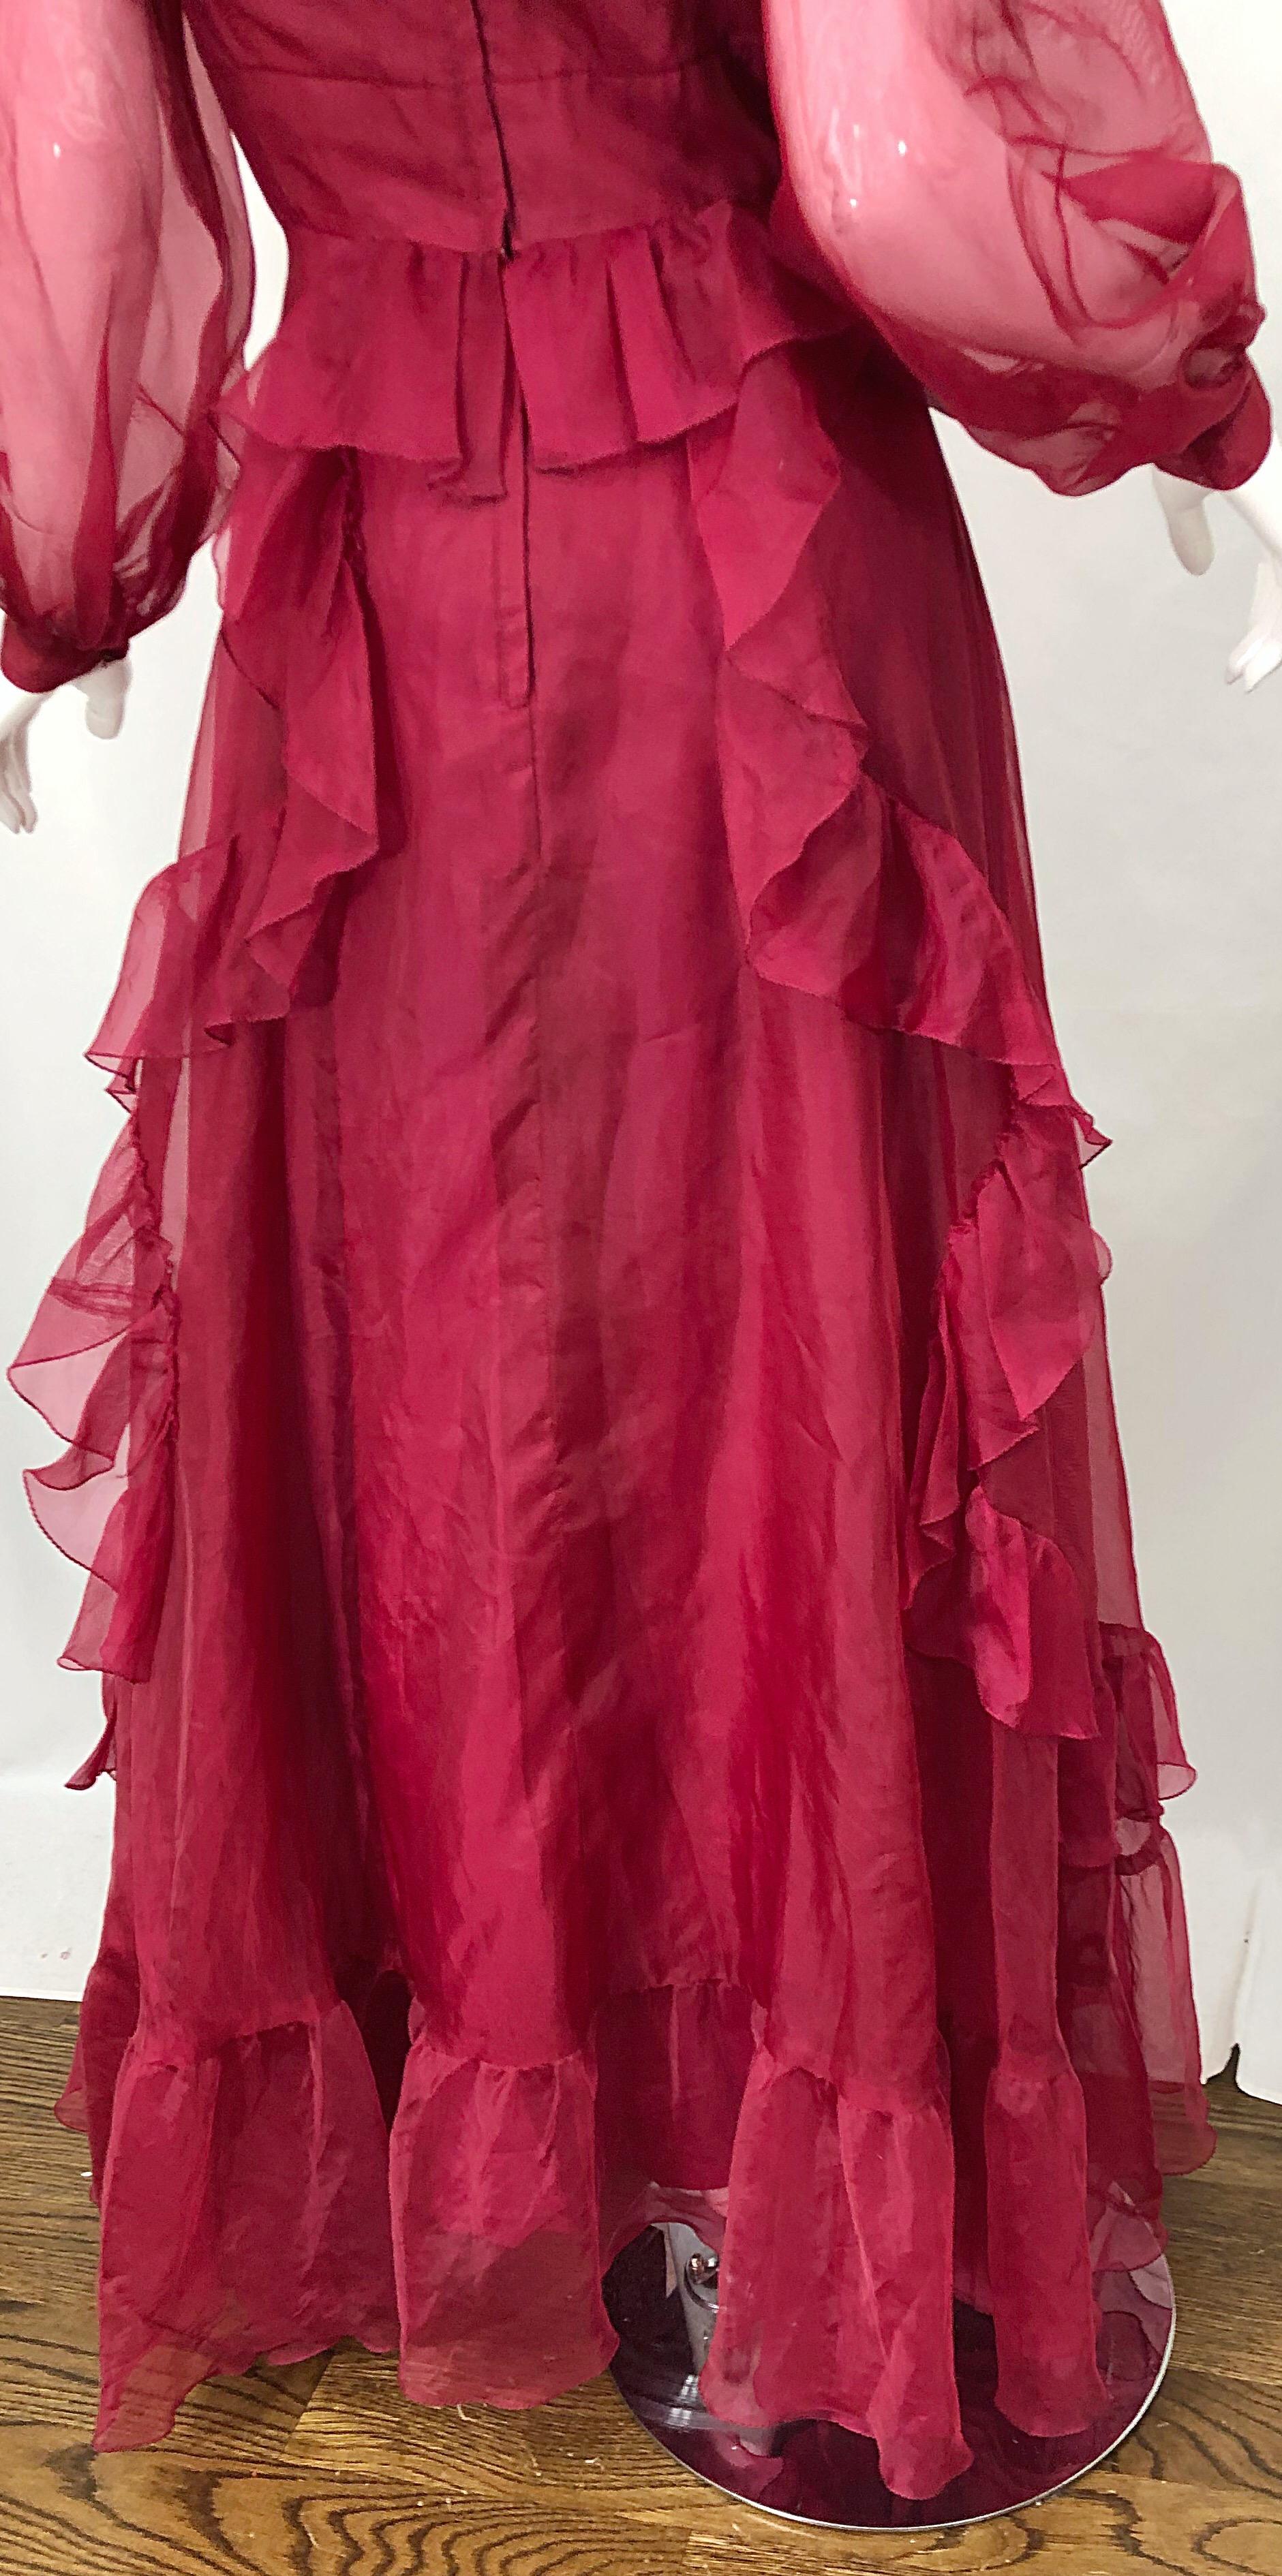 70s red dress